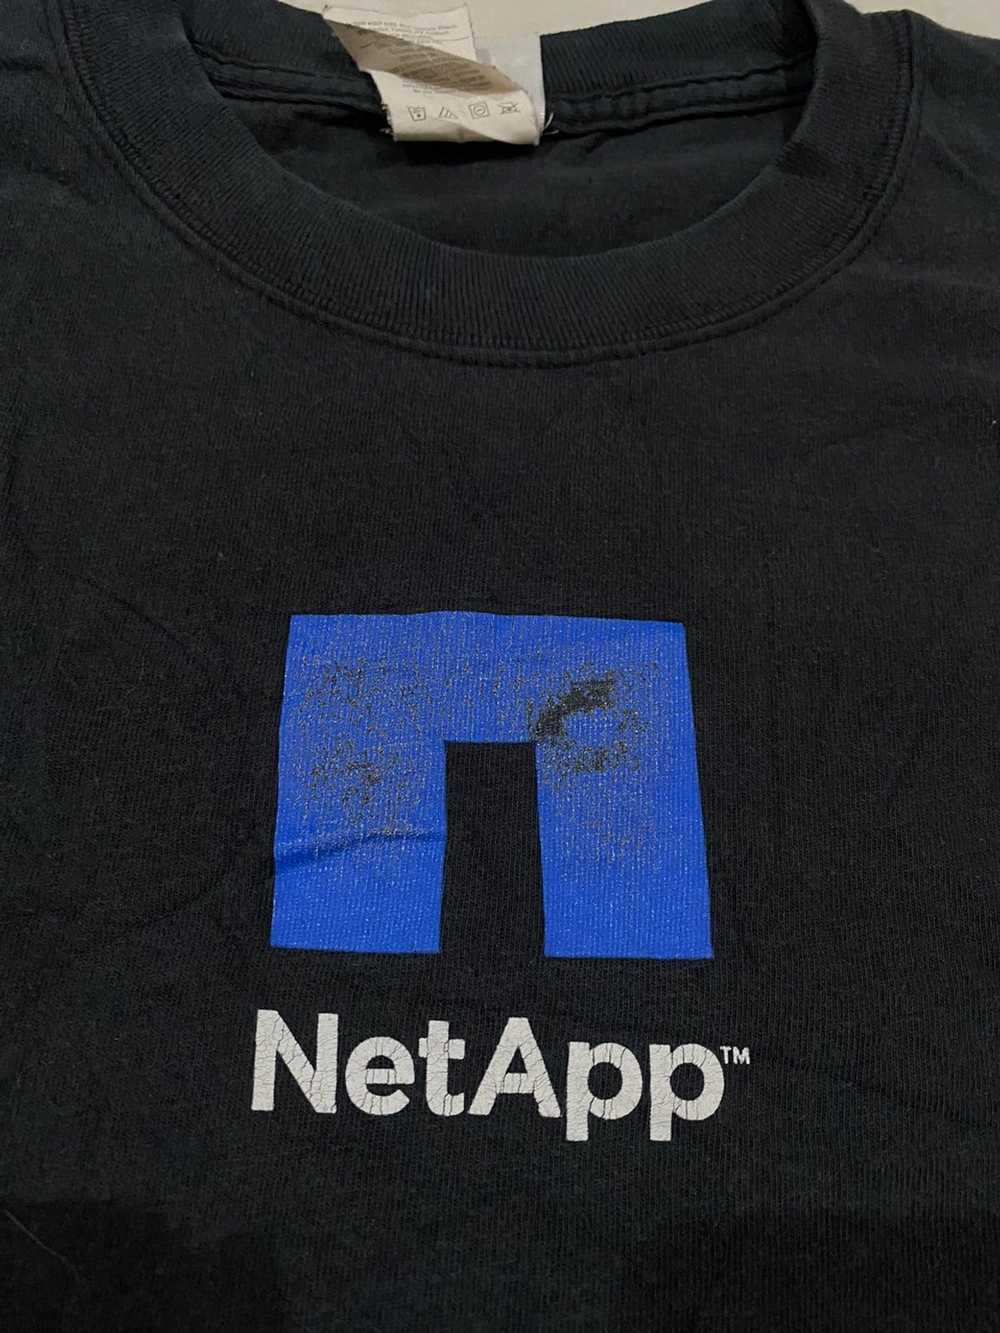 Apple × Japanese Brand NetApp T Shirt - image 6